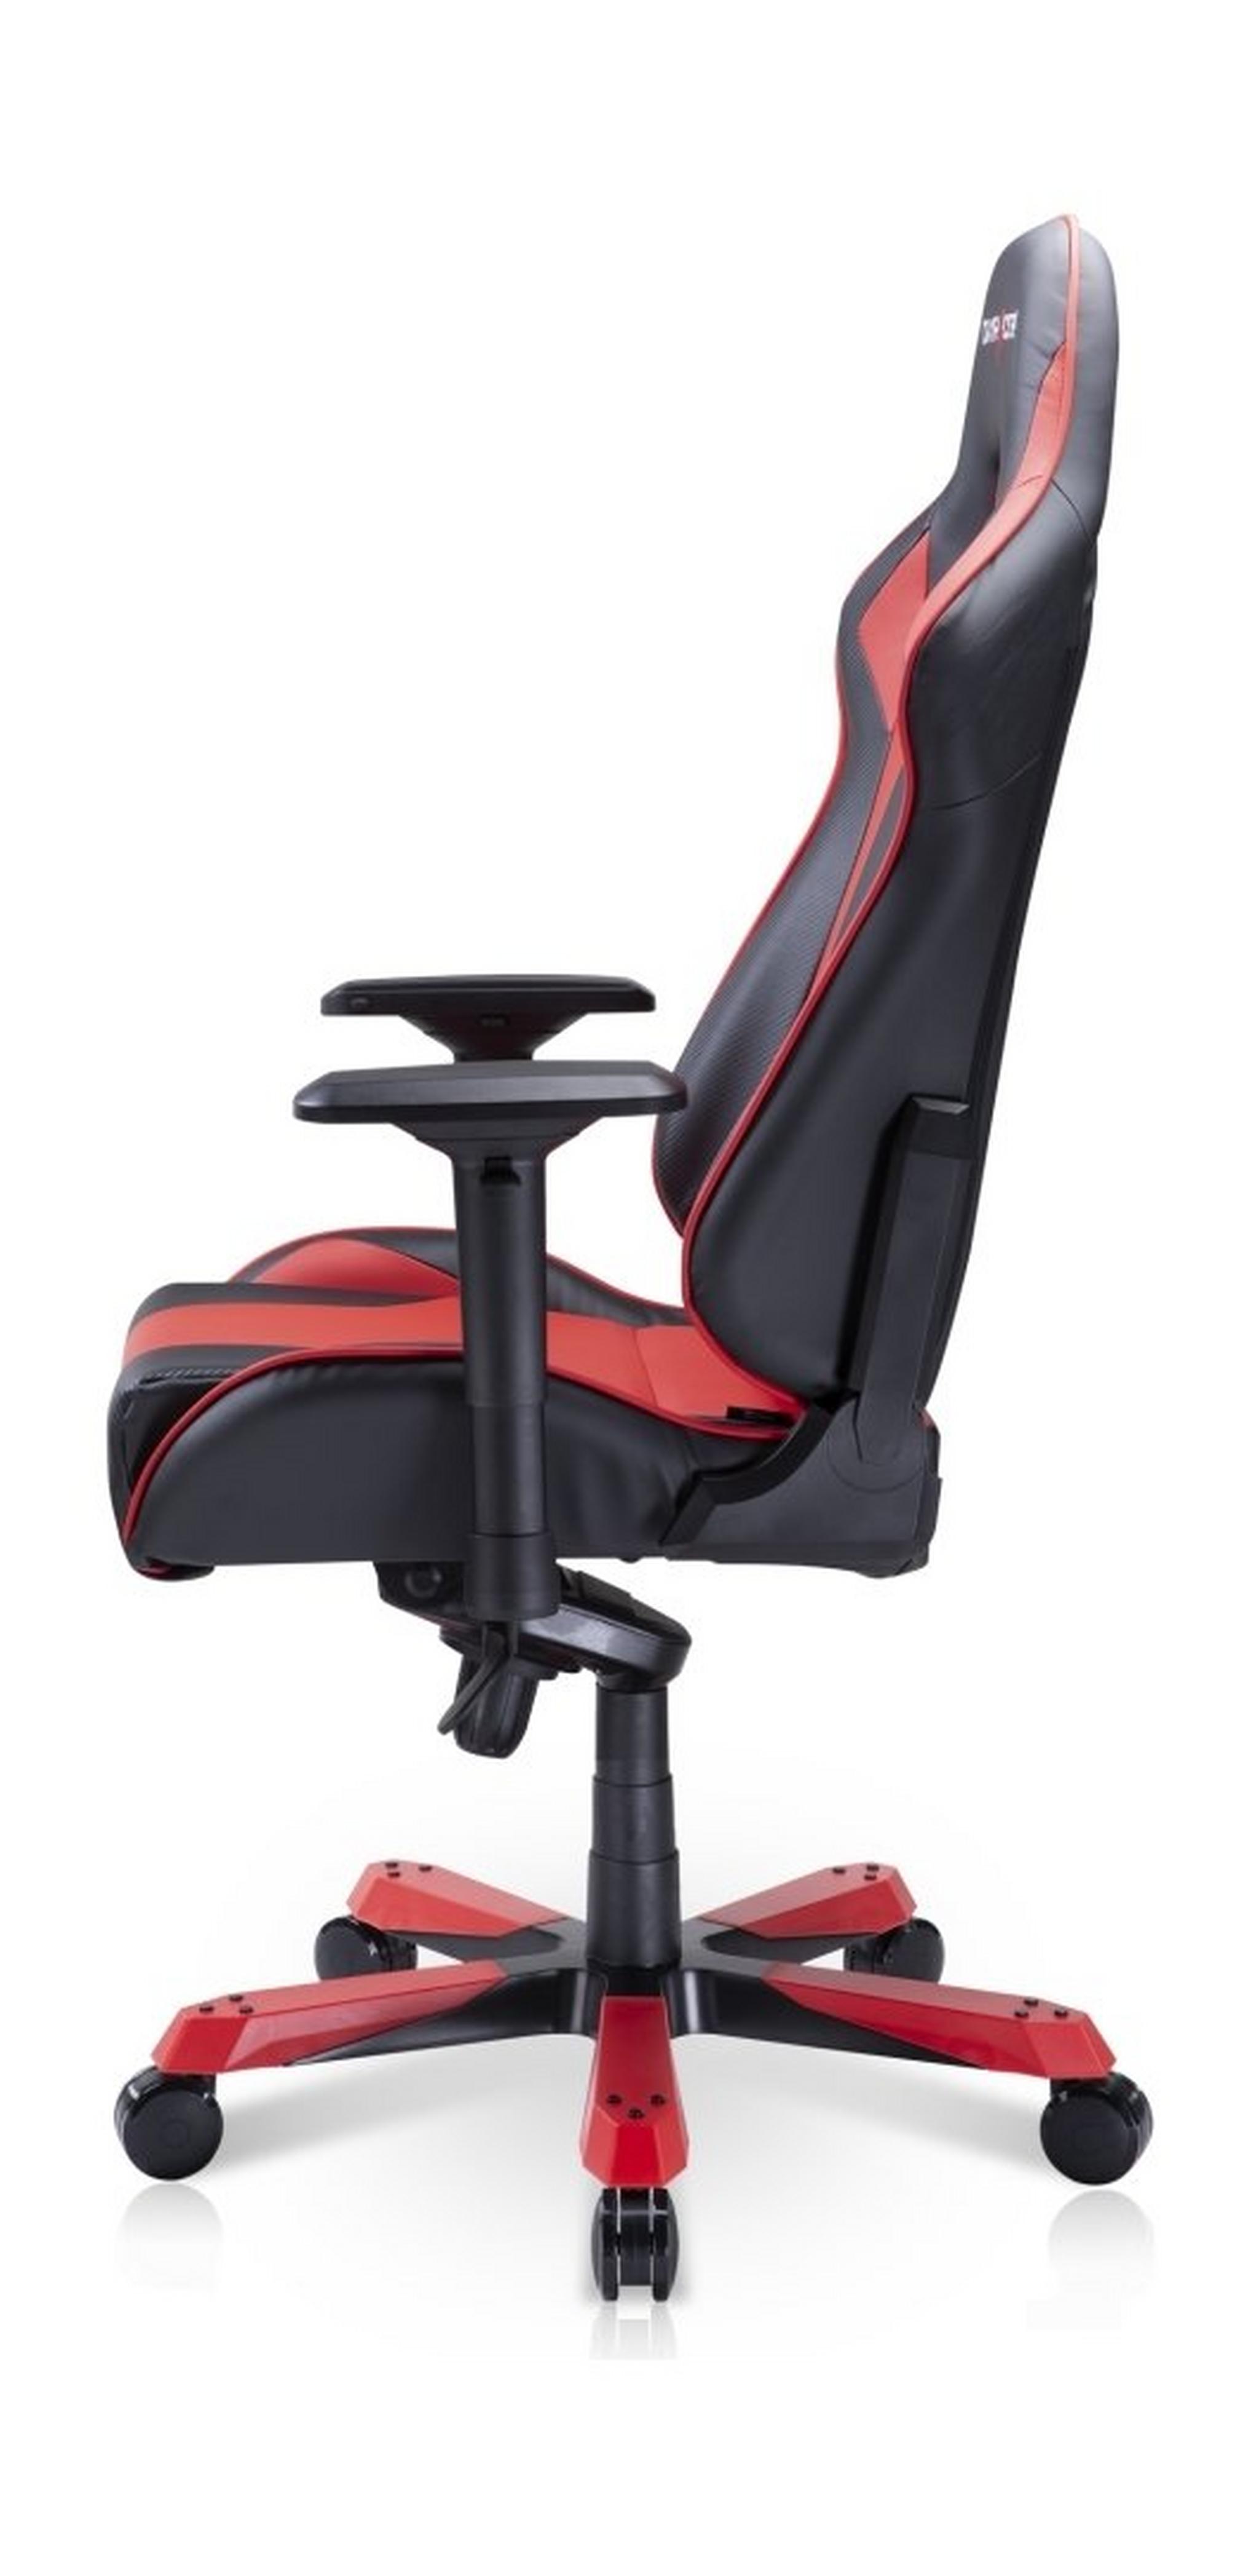 DXRacer King Series Gaming Chair - Black Red